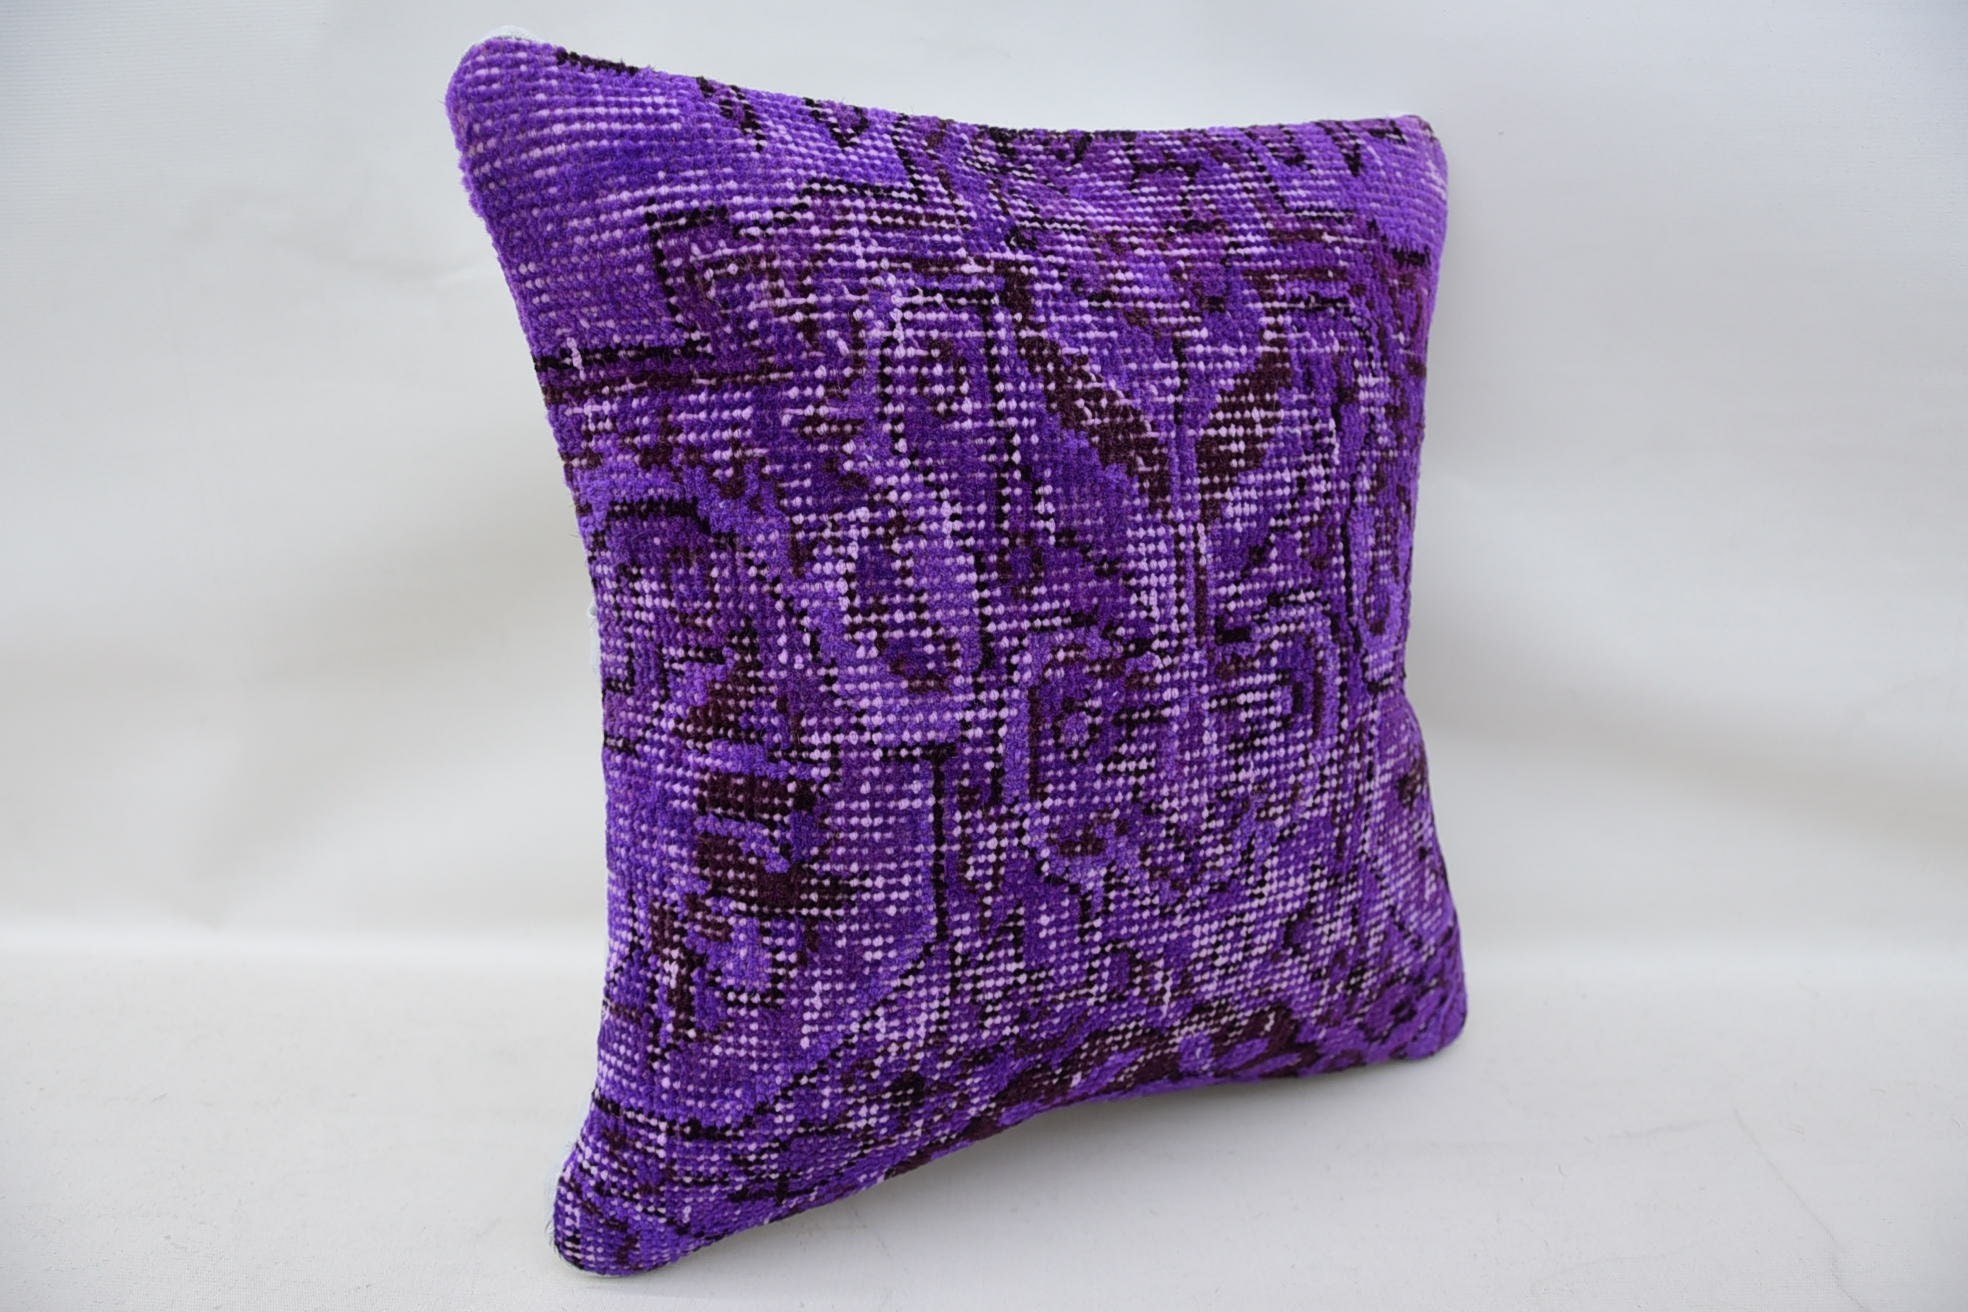 Vintage Kilim Throw Pillow, Ethnic Throw Pillow Sham, 14"x14" Purple Pillow, Pillow for Couch, Retro Pillow Cover, Antique Pillows